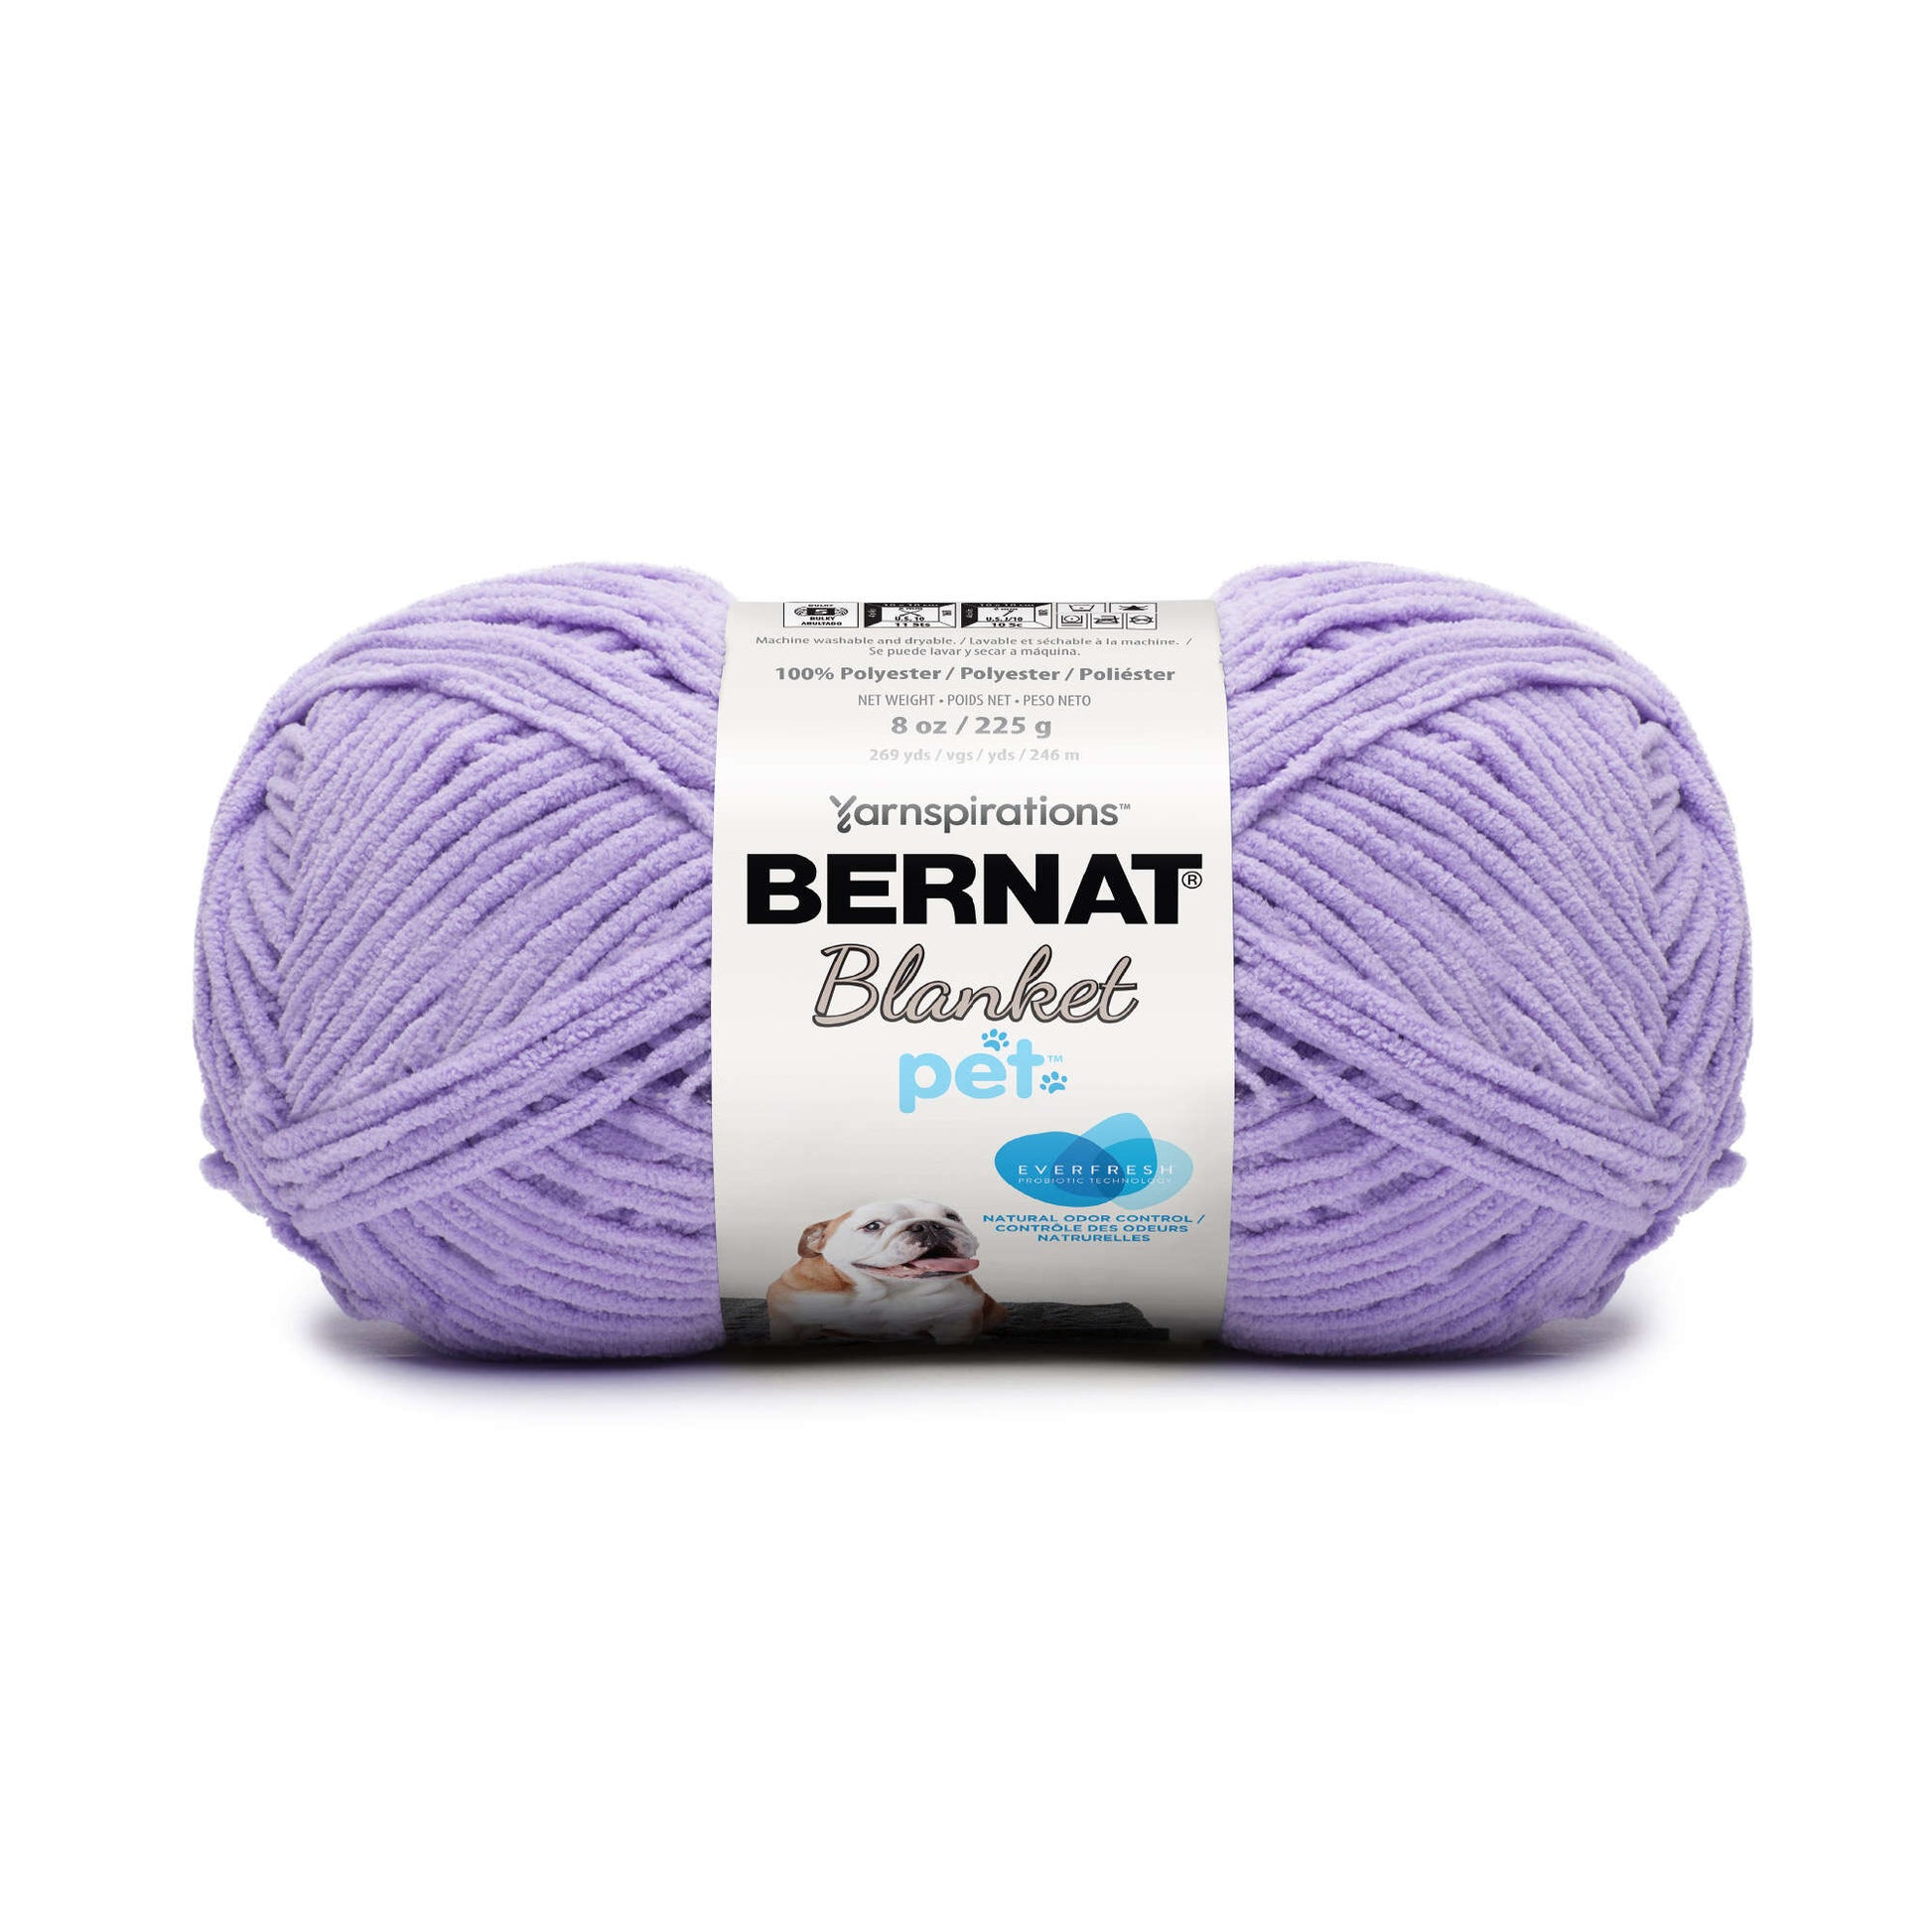 Bernat Blanket Pet Yarn - Discontinued Shades